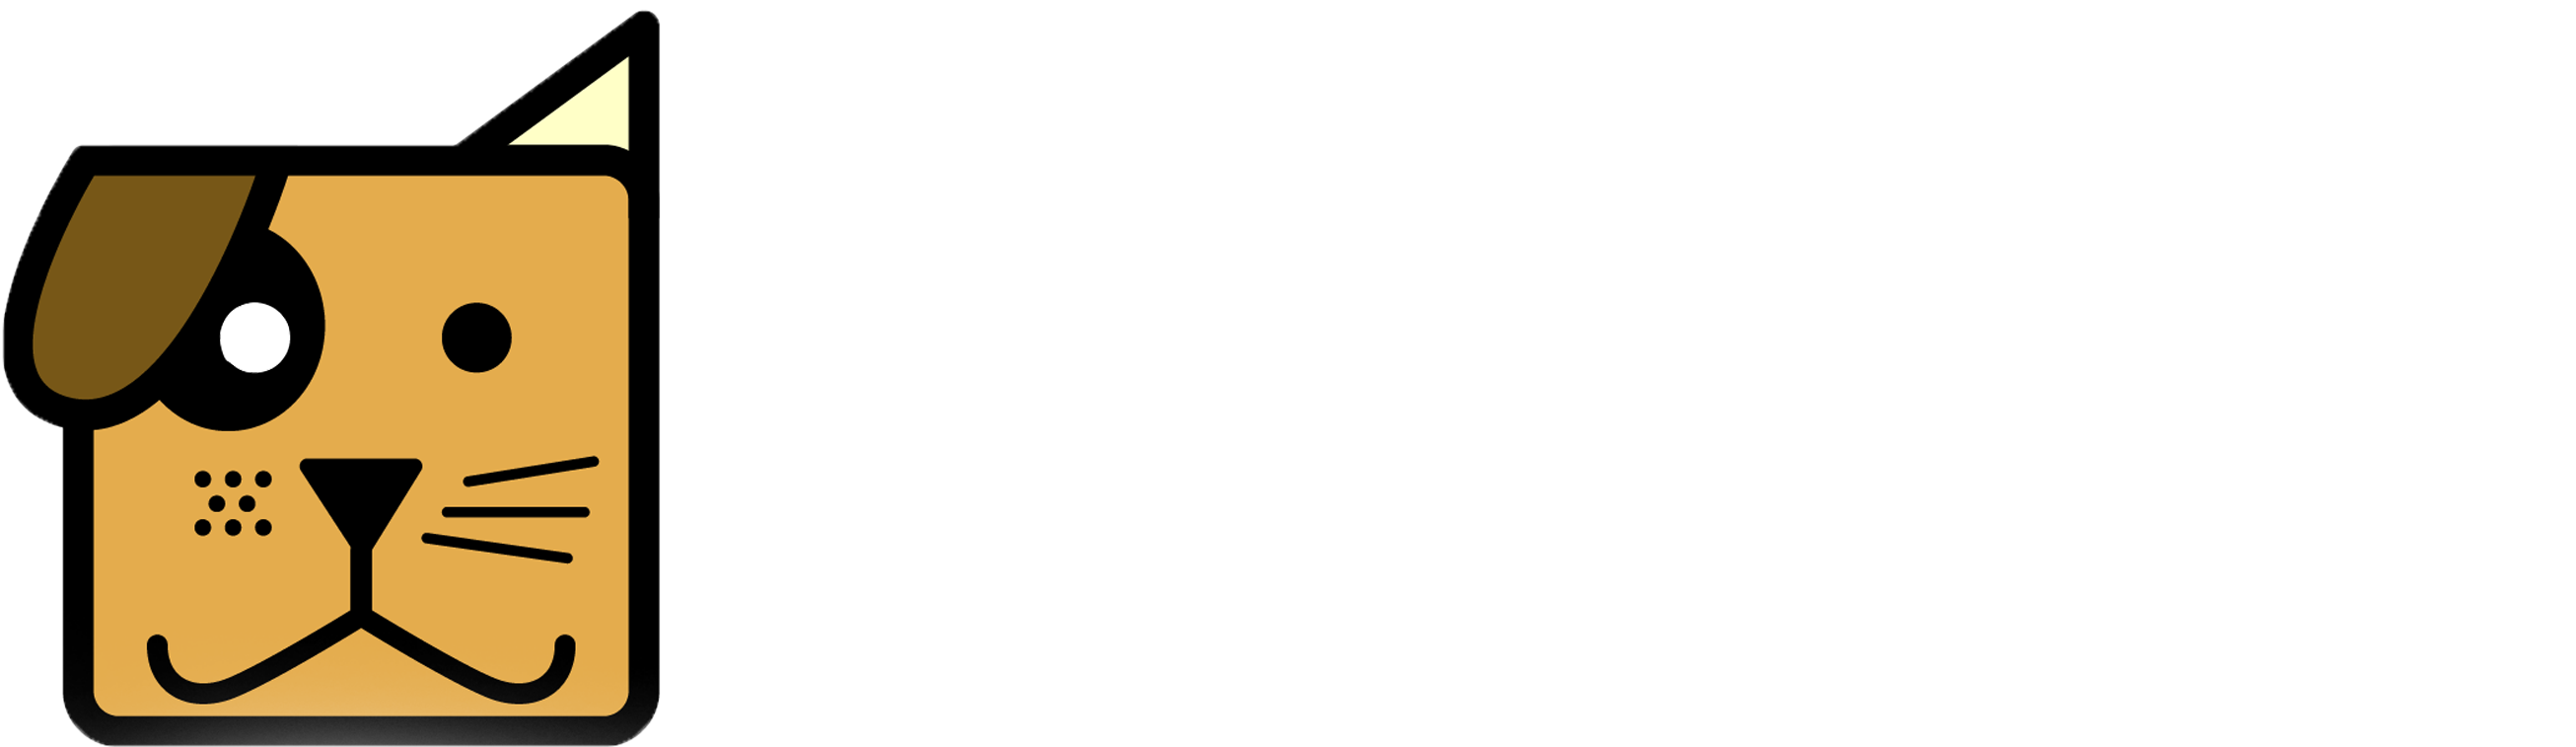 scpa_logo-2withcode